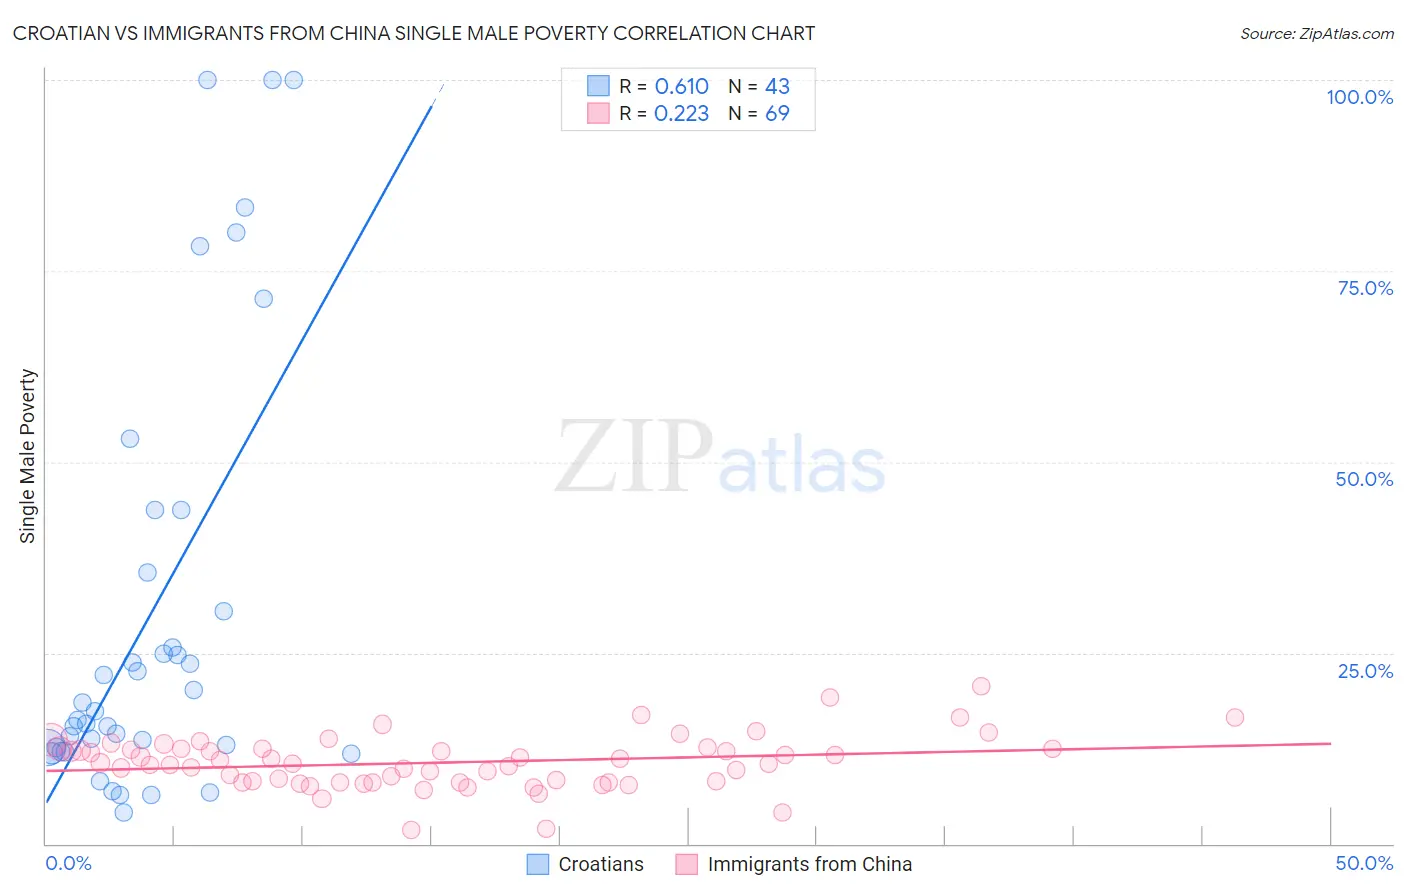 Croatian vs Immigrants from China Single Male Poverty